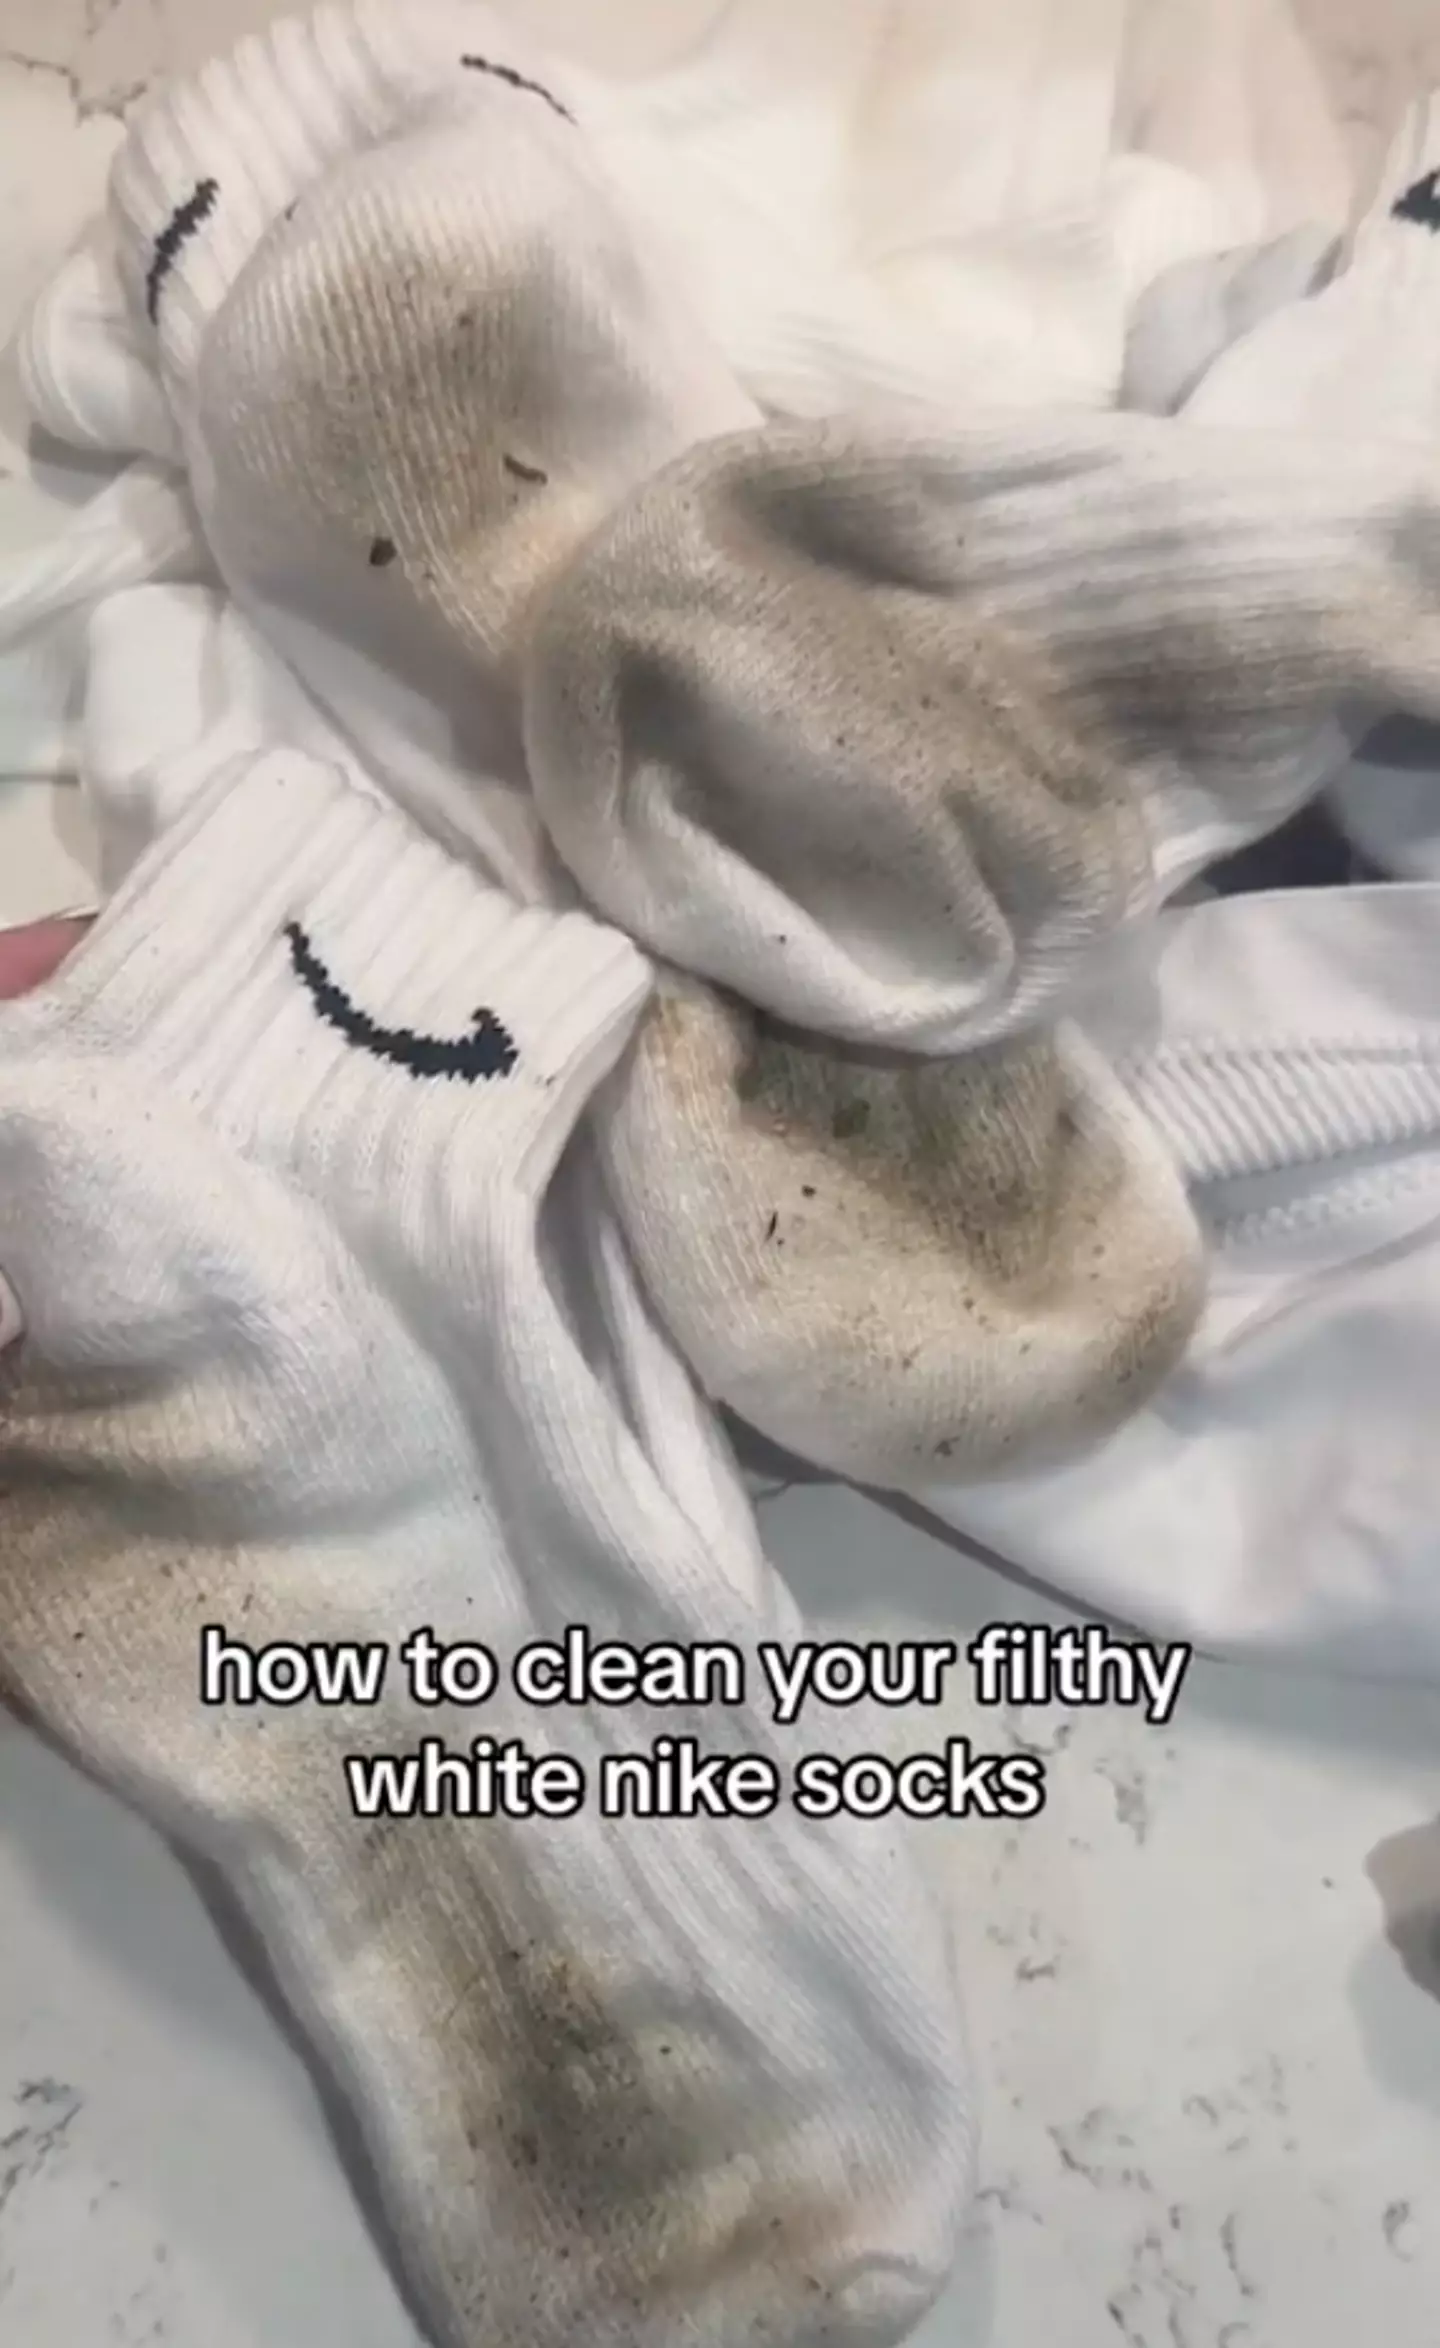 Jenna revealed how she washes her grubby socks.